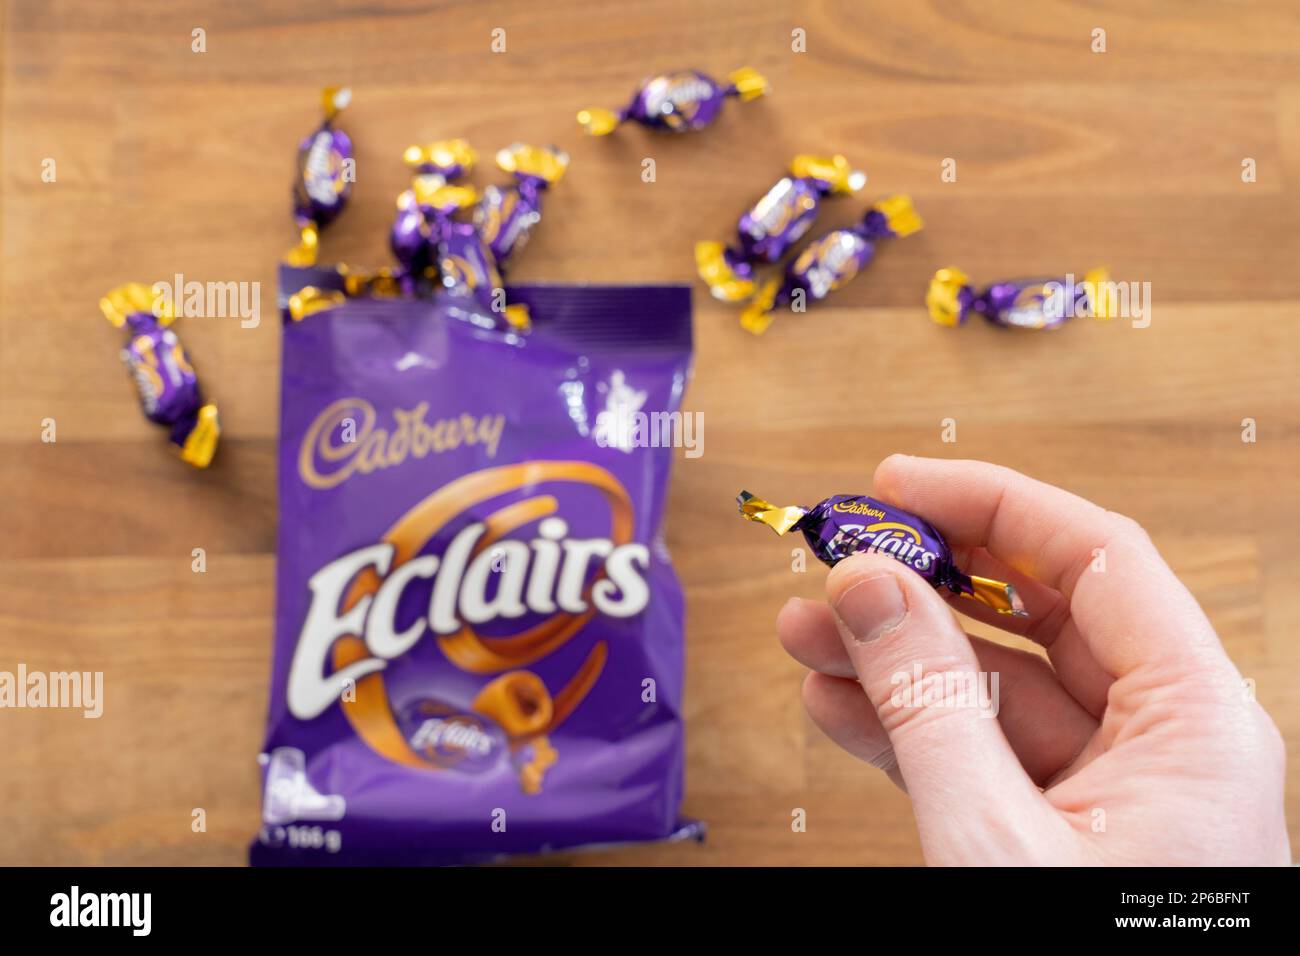 A man's hand holding a Cadbury chocolate eclair sweet. UK. Concept: Cadbury brand, unhealthy eating, snacking, food addiction Stock Photo